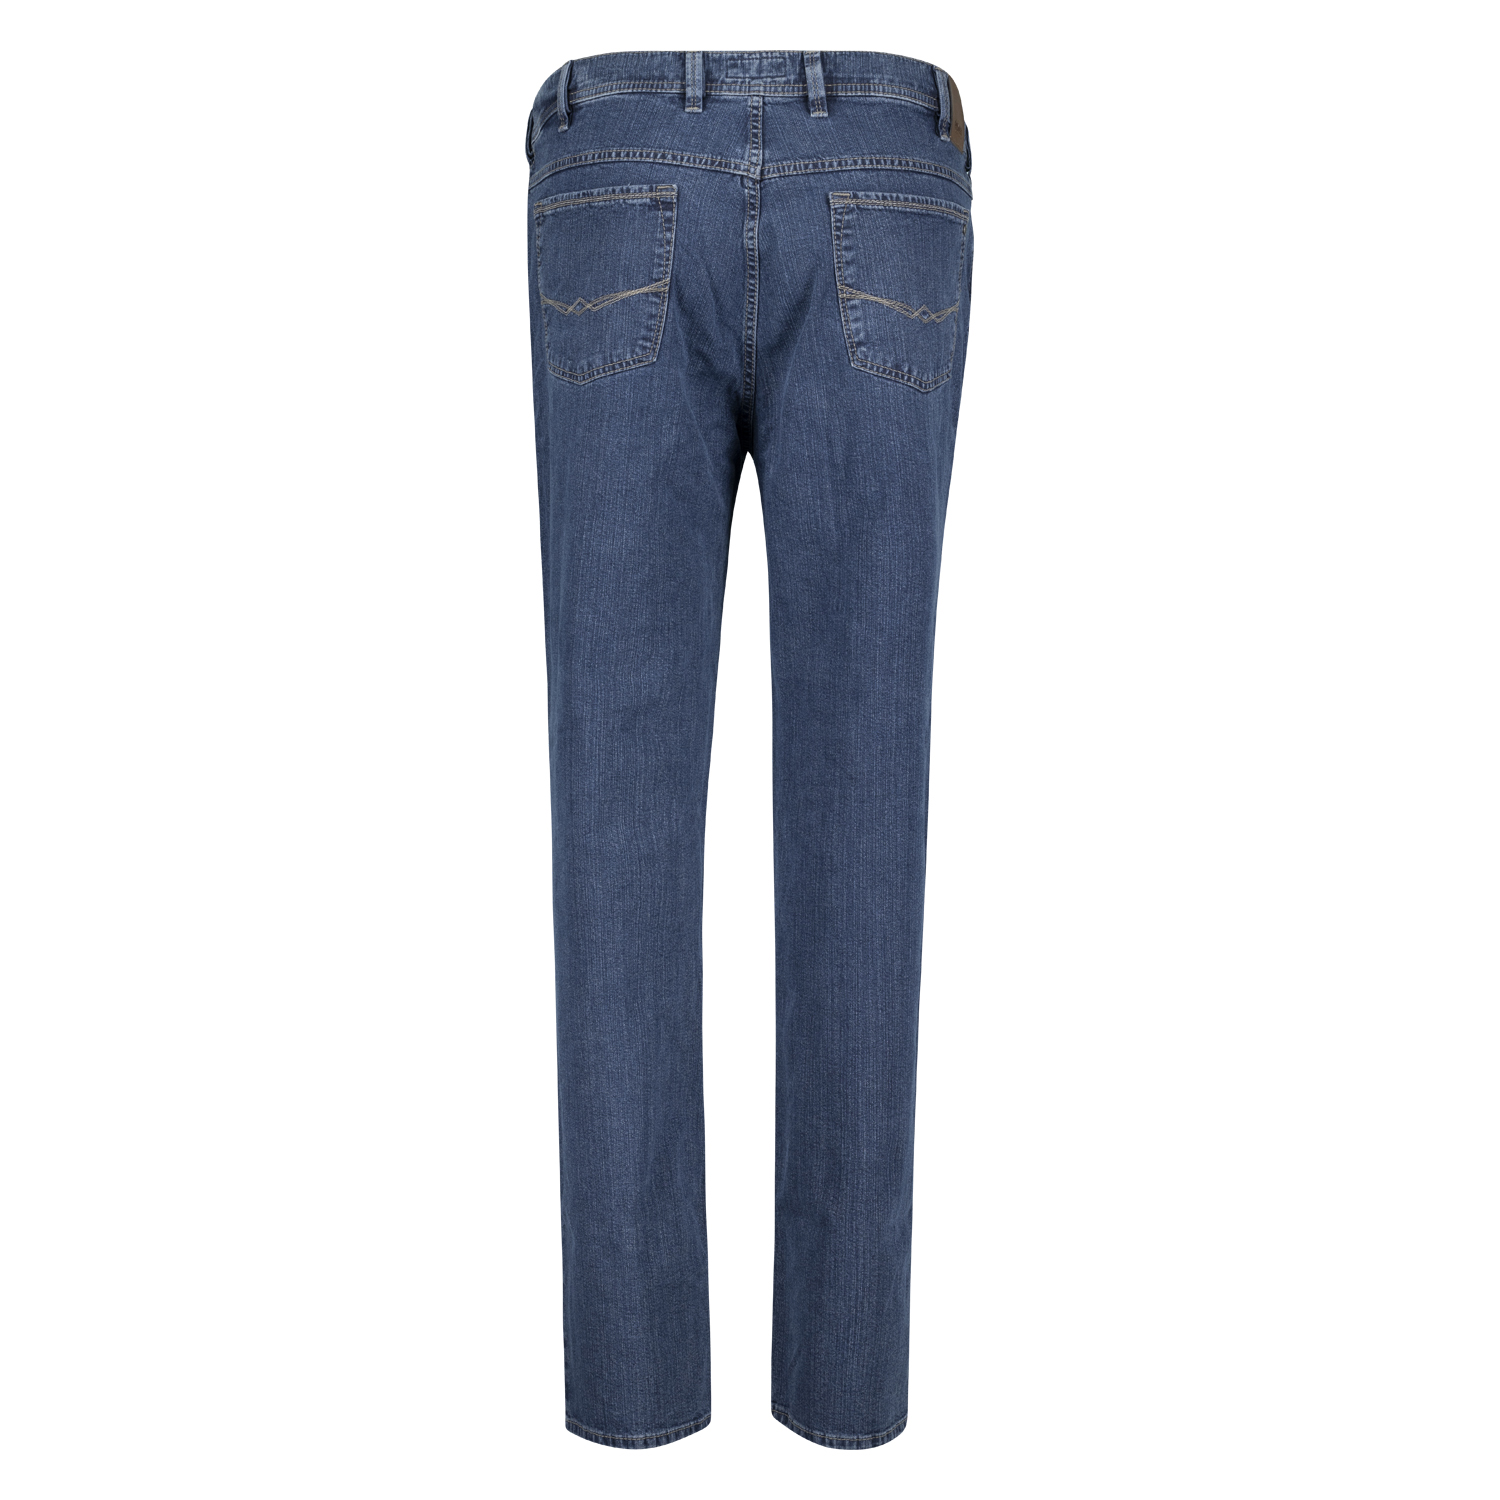 Five pocket jeans model "Peter" by Pioneer in oversize blue stonewash (regular rise): 56 - 74